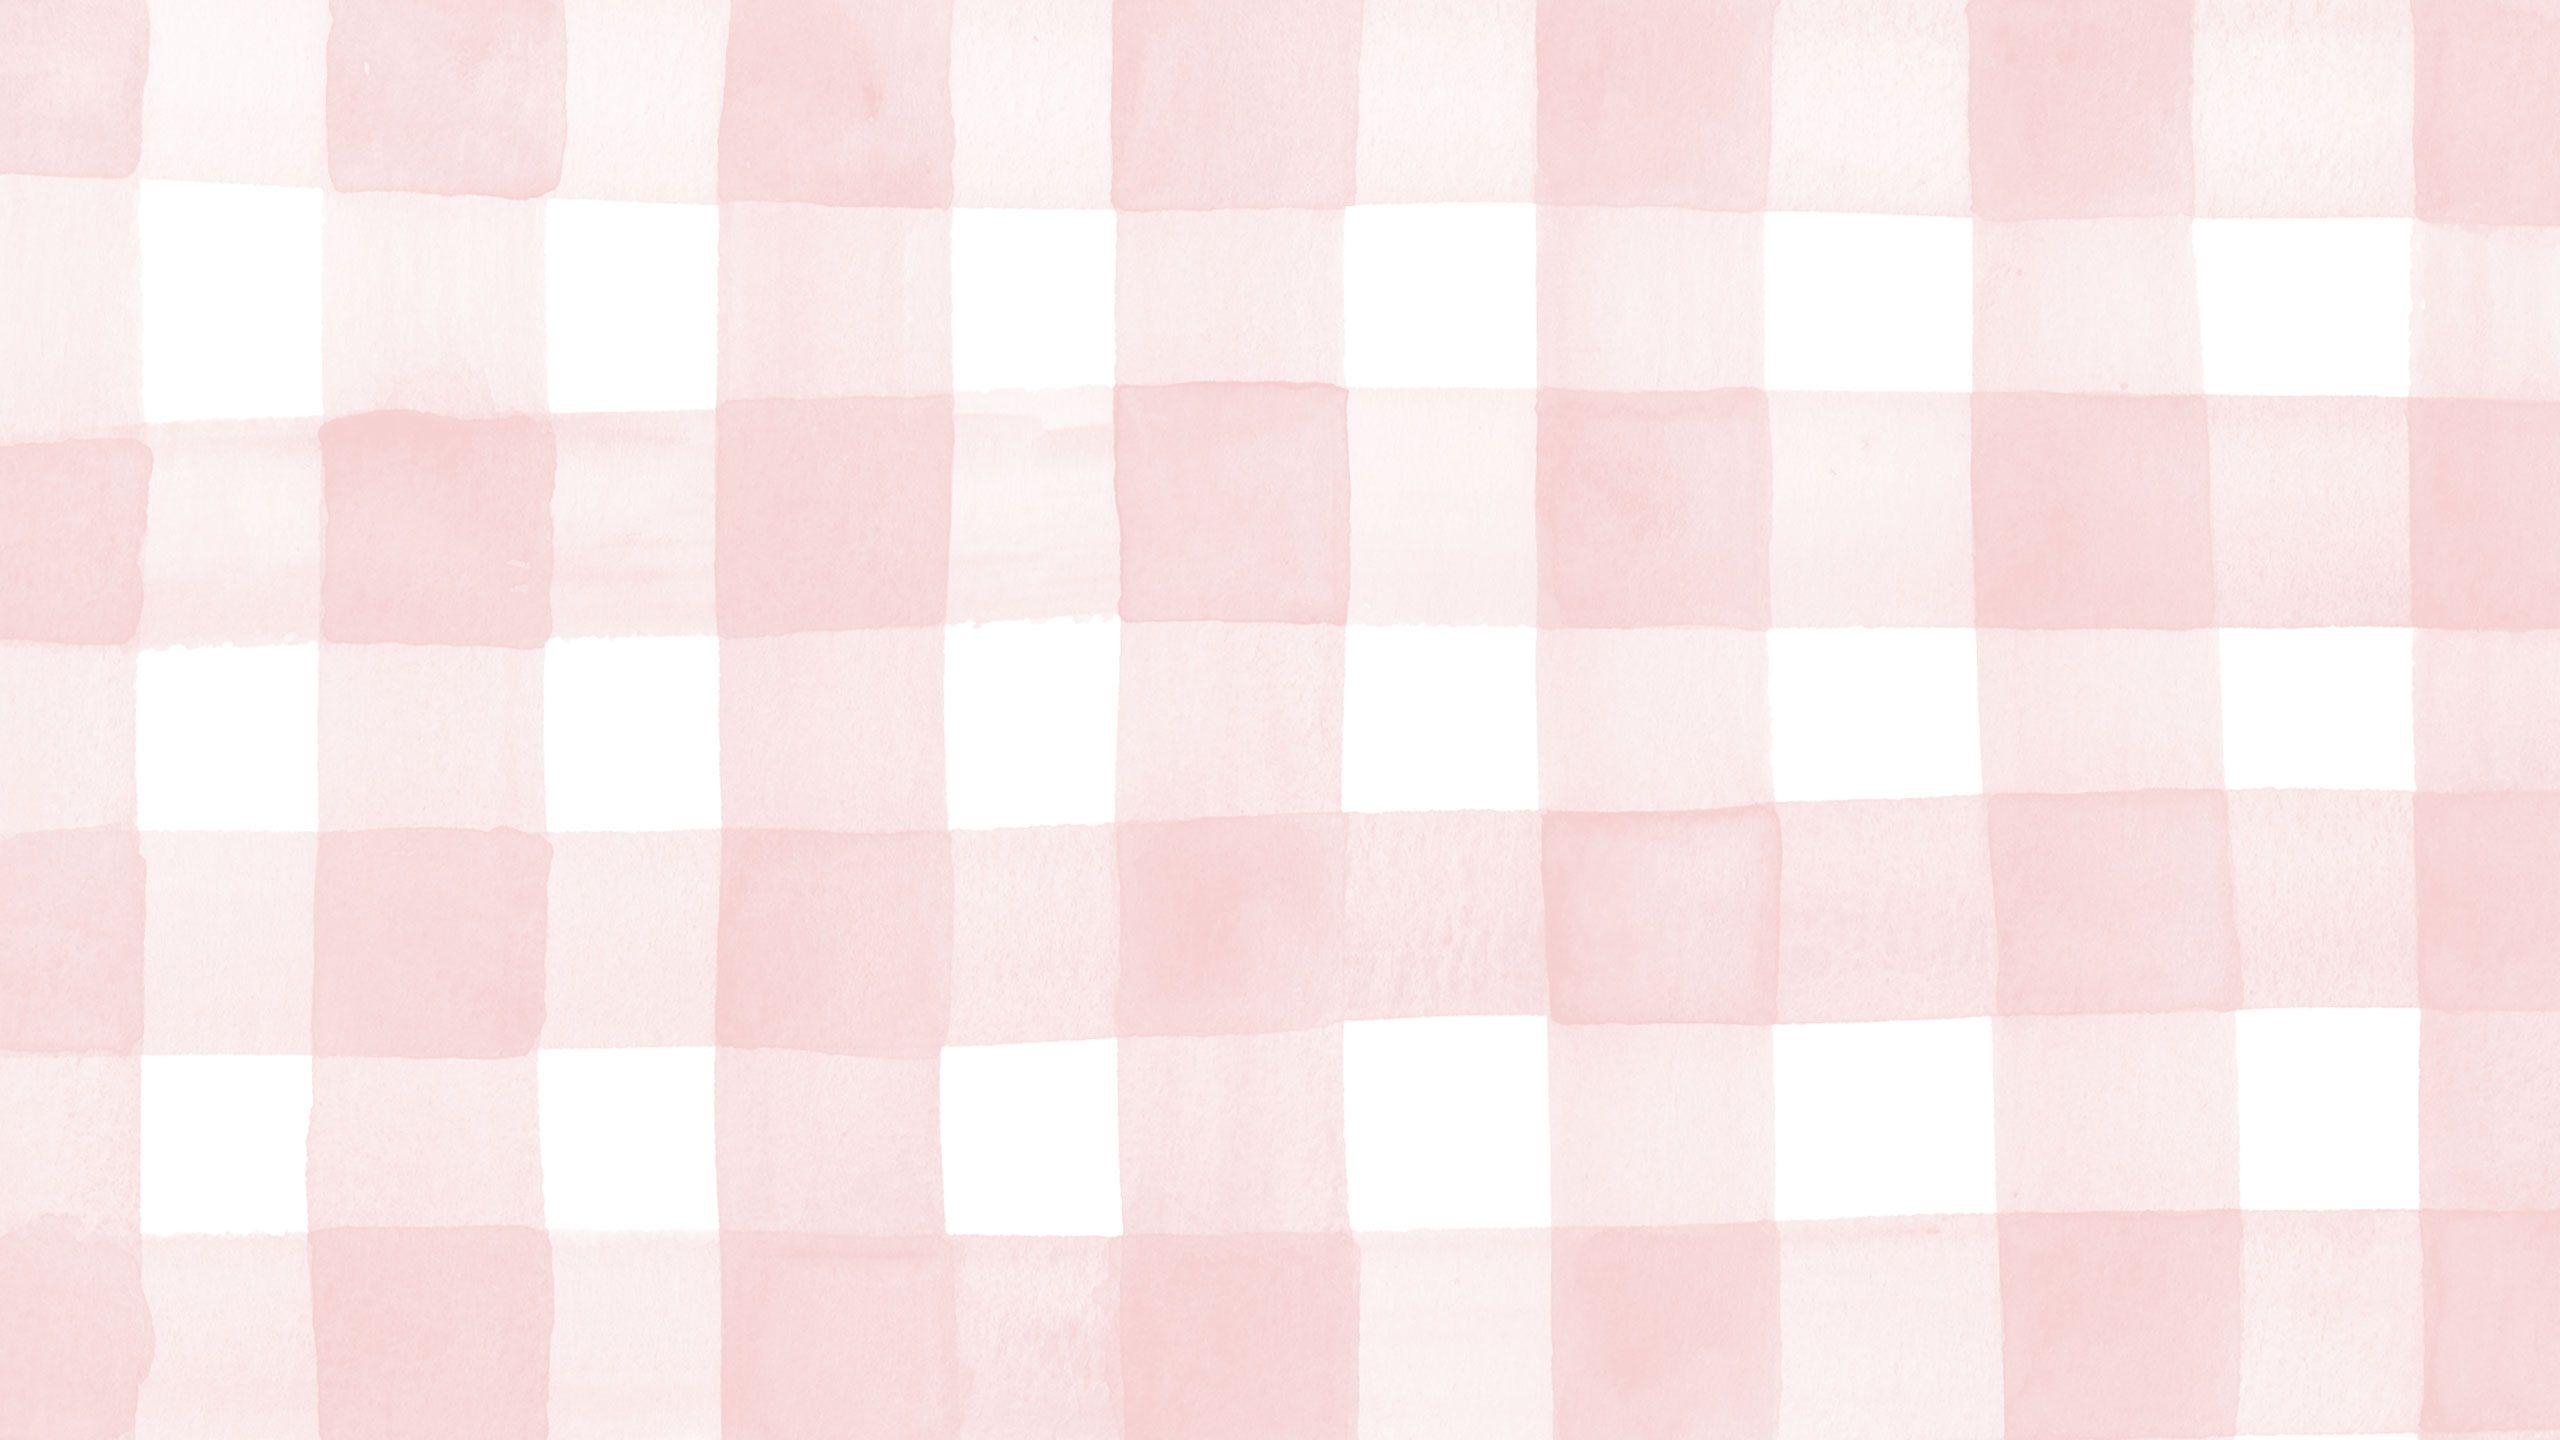  Aesthetic  Pink  Desktop  Wallpapers  Top Free Aesthetic  